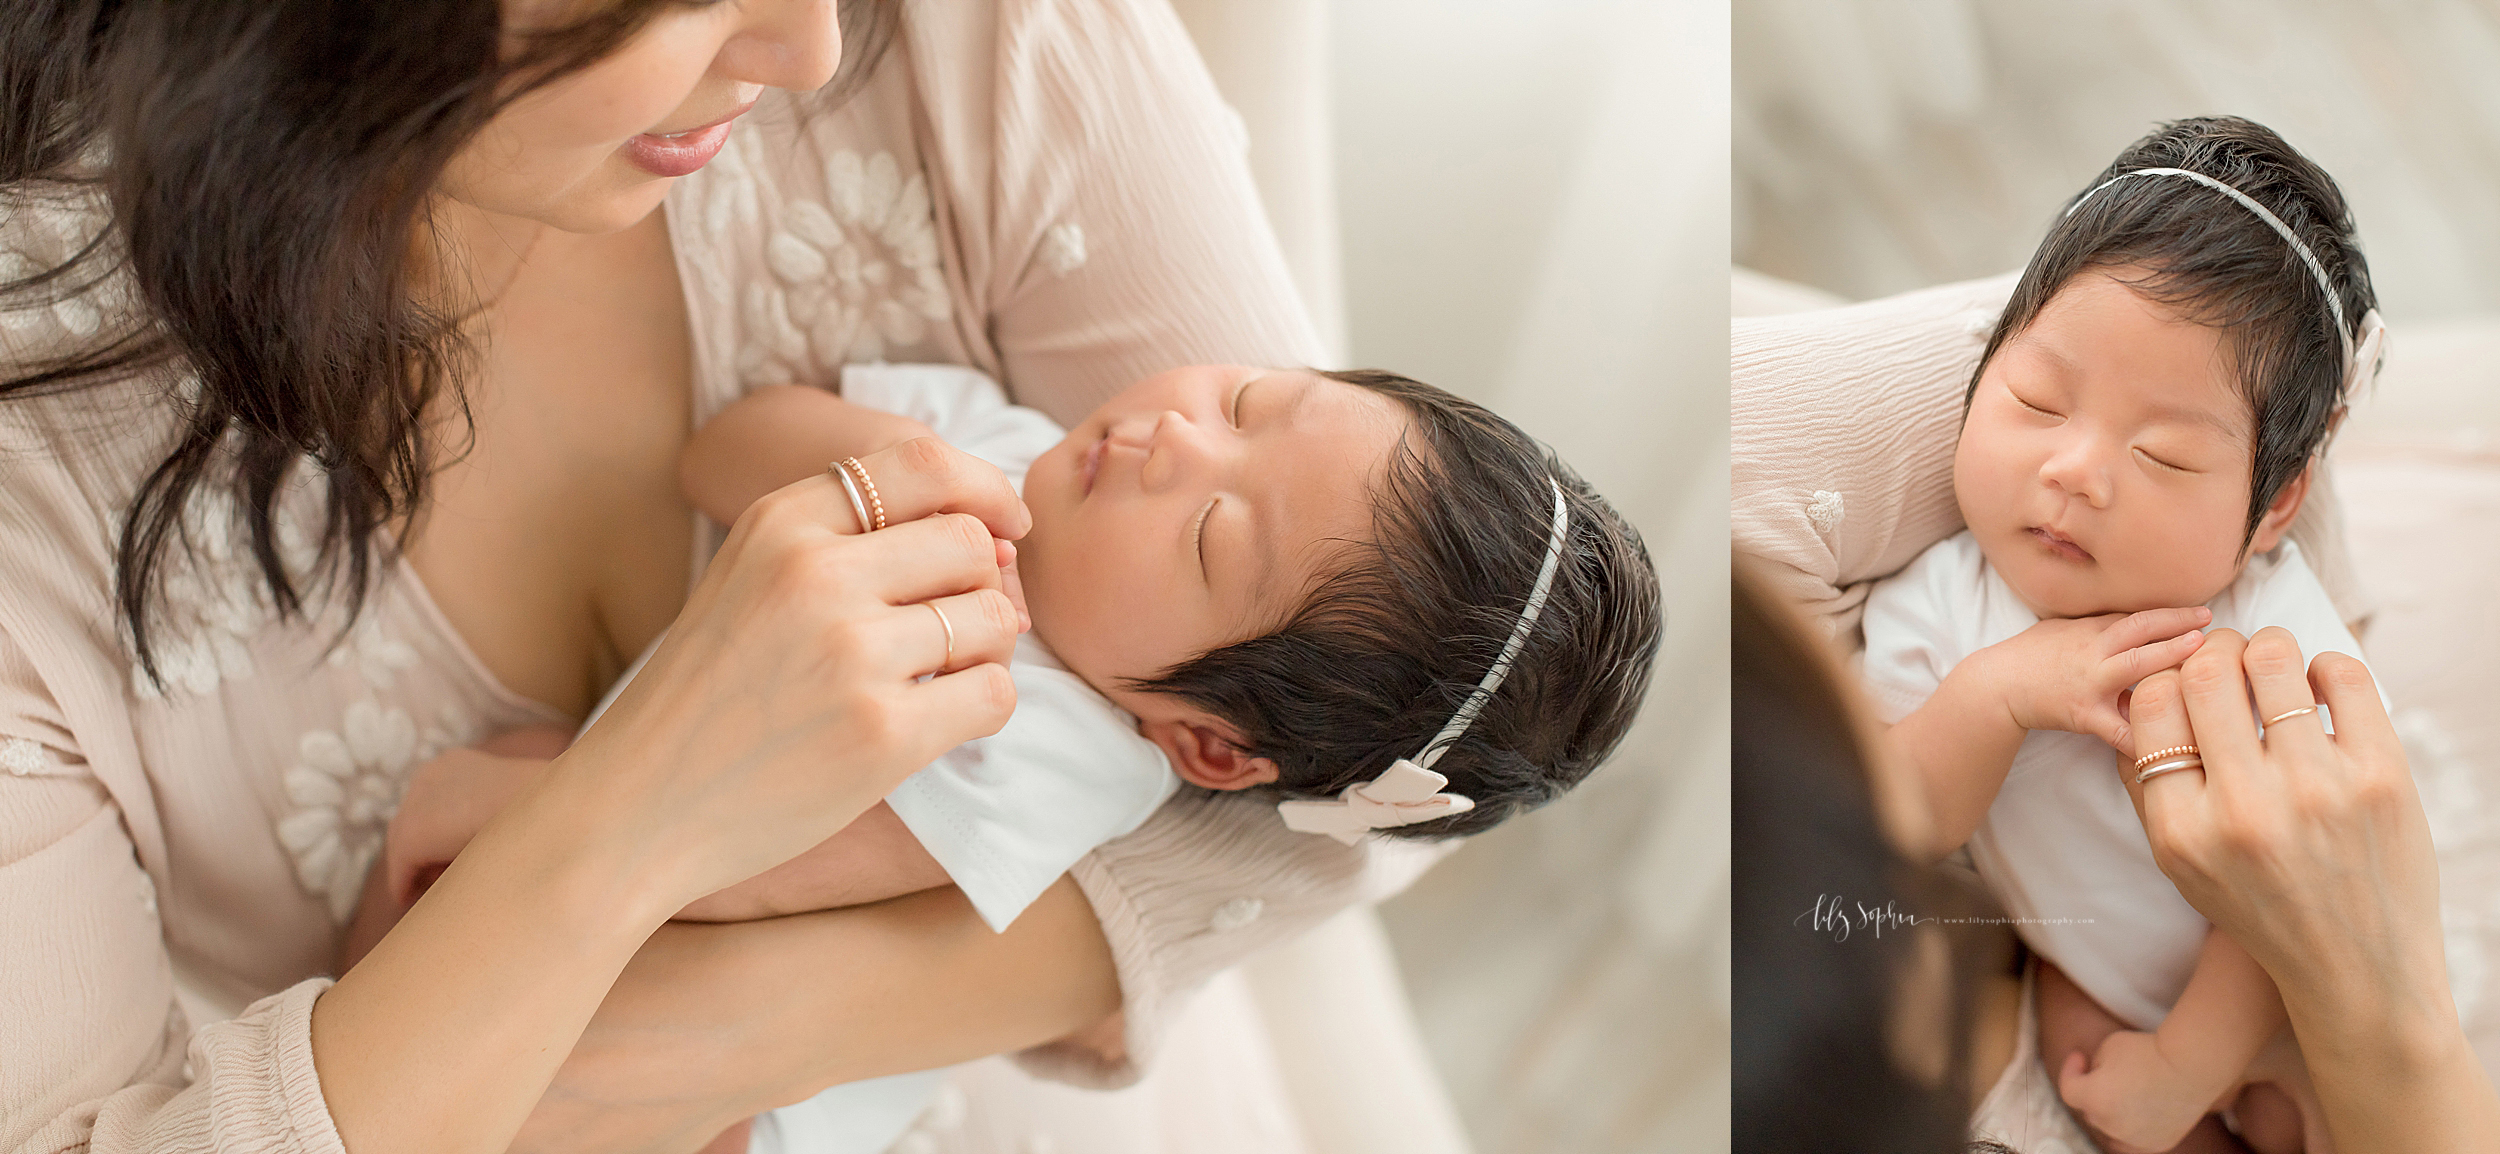 atlanta-midtown-marietta-decatur-lily-sophia-photography-korean-family-photographer-natural-light-studio-newborn-baby-girl-photos_0261.jpg